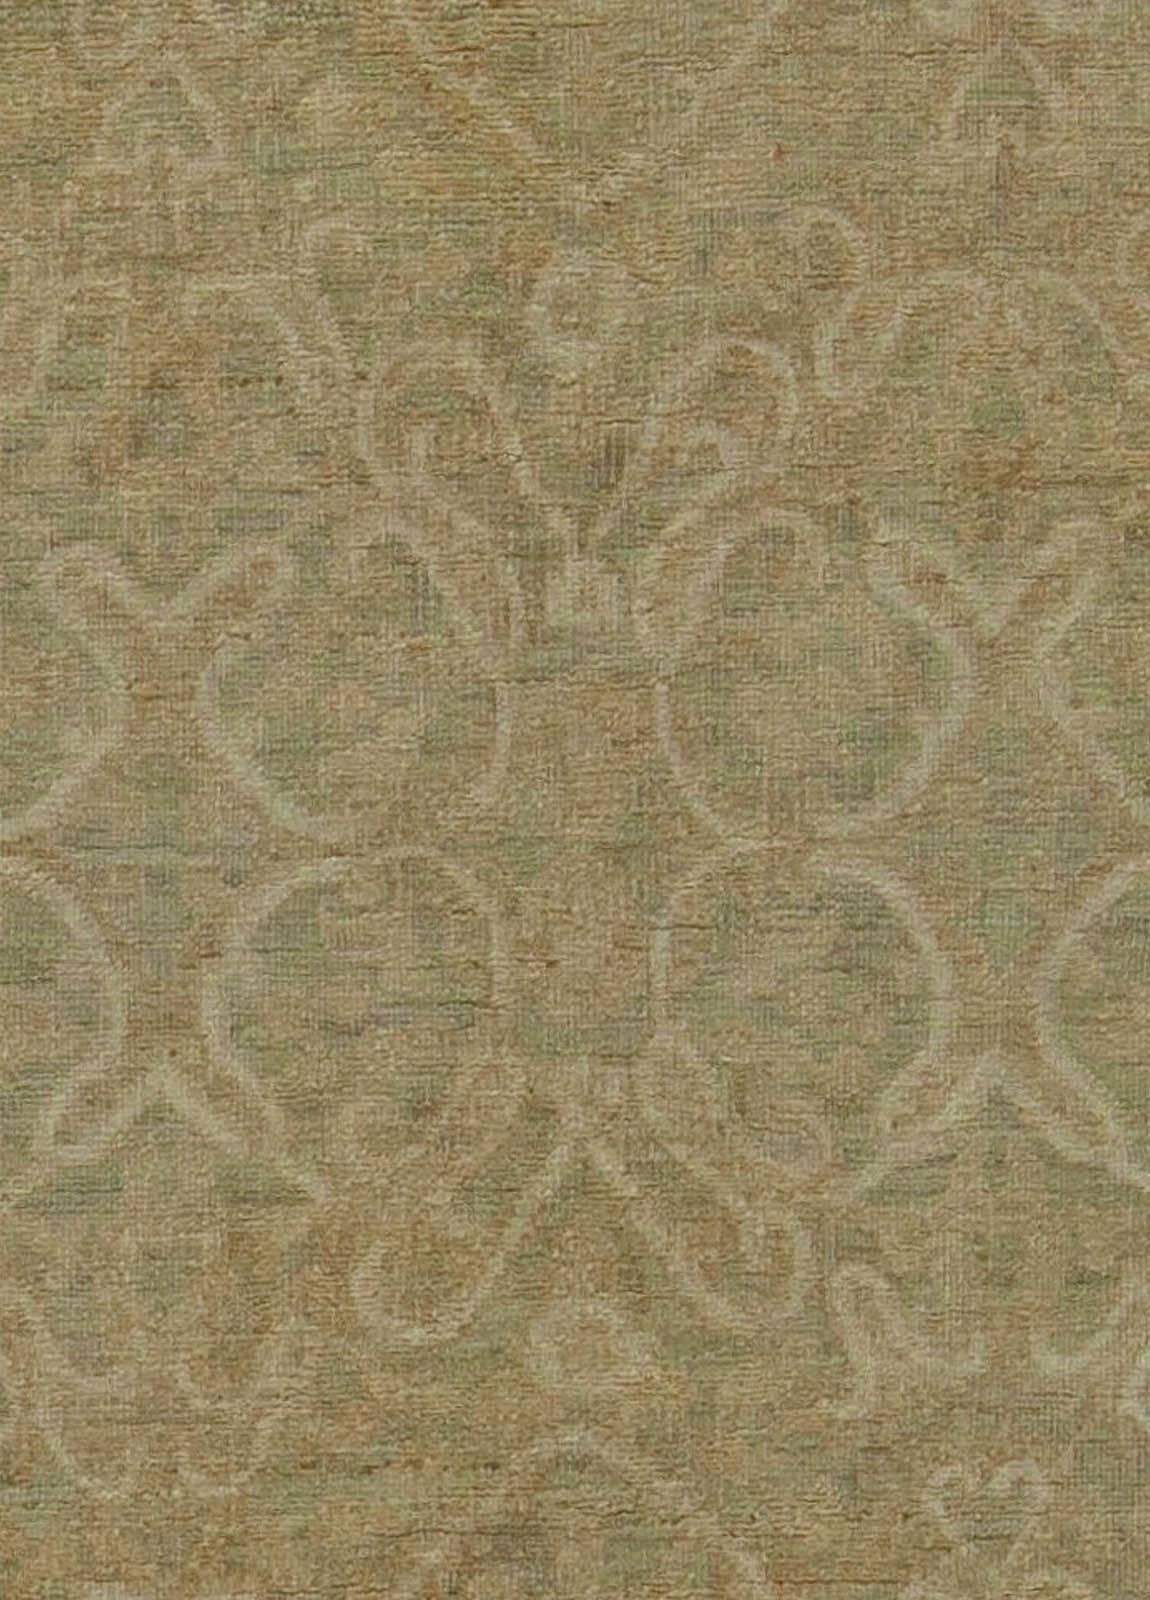 Contemporary Tabriz design light brown and beige handmade wool rug by Doris Leslie Blau.
Size: 5'1